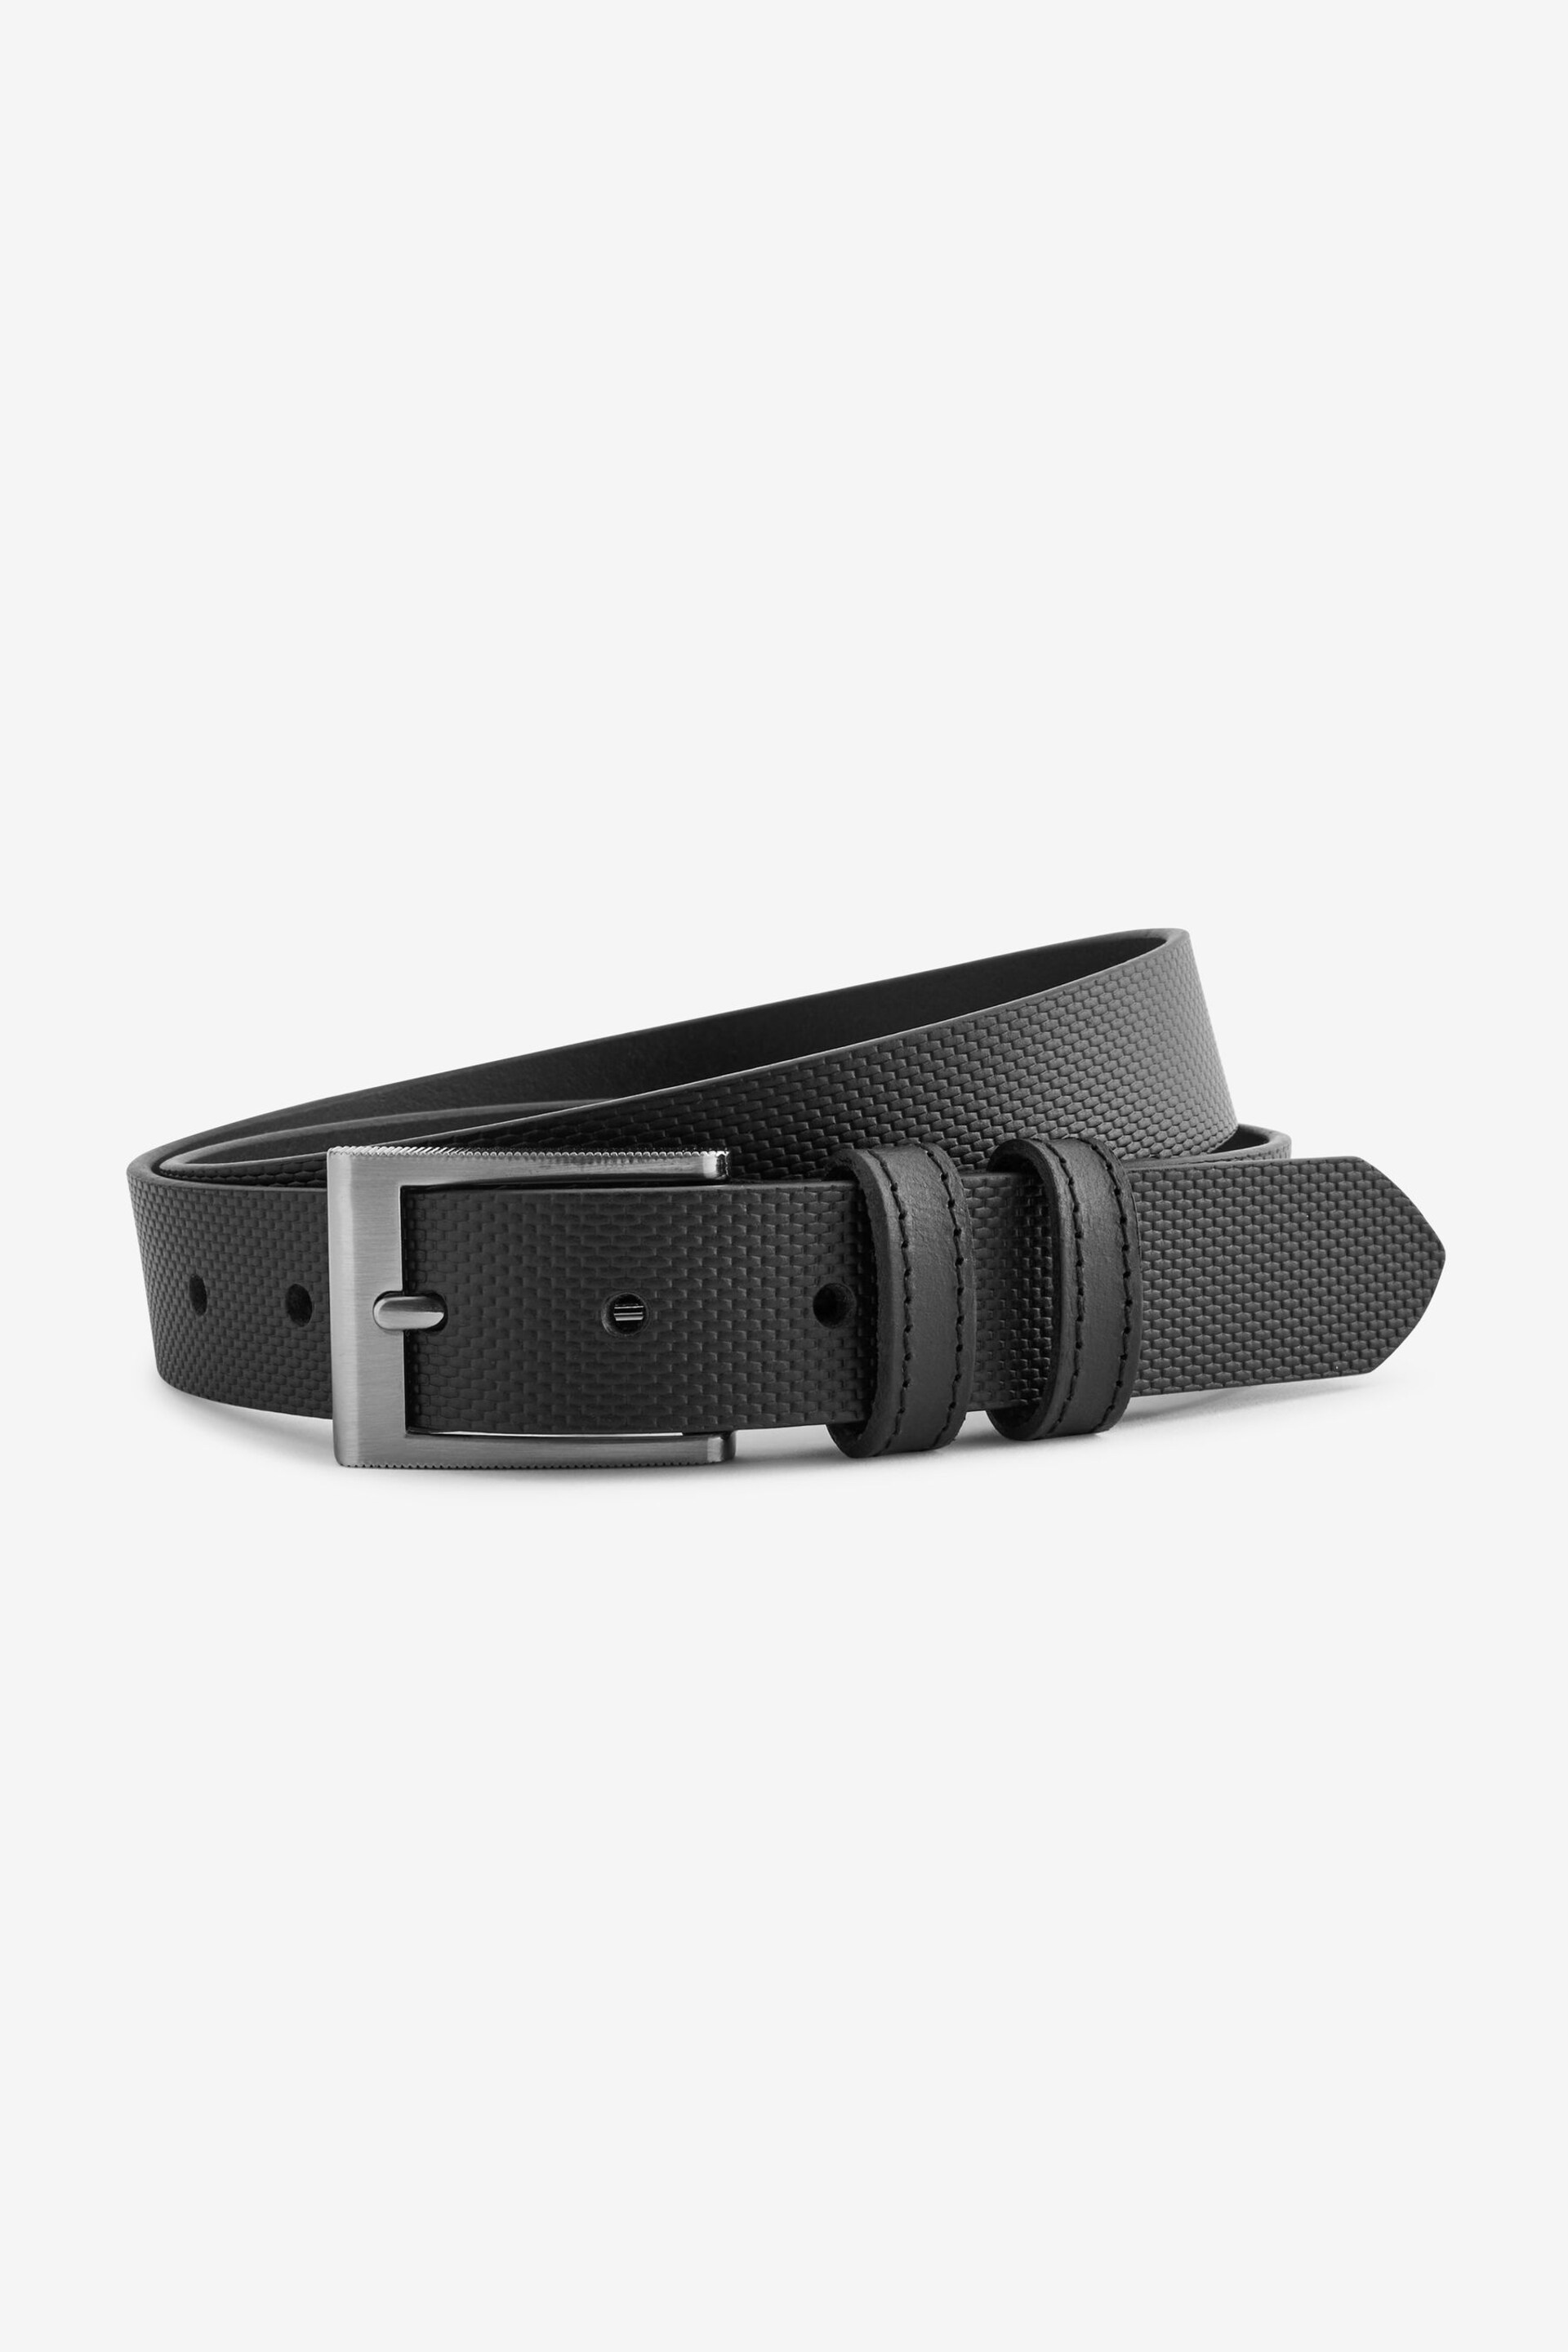 Black Textured Leather Belt - Image 2 of 3